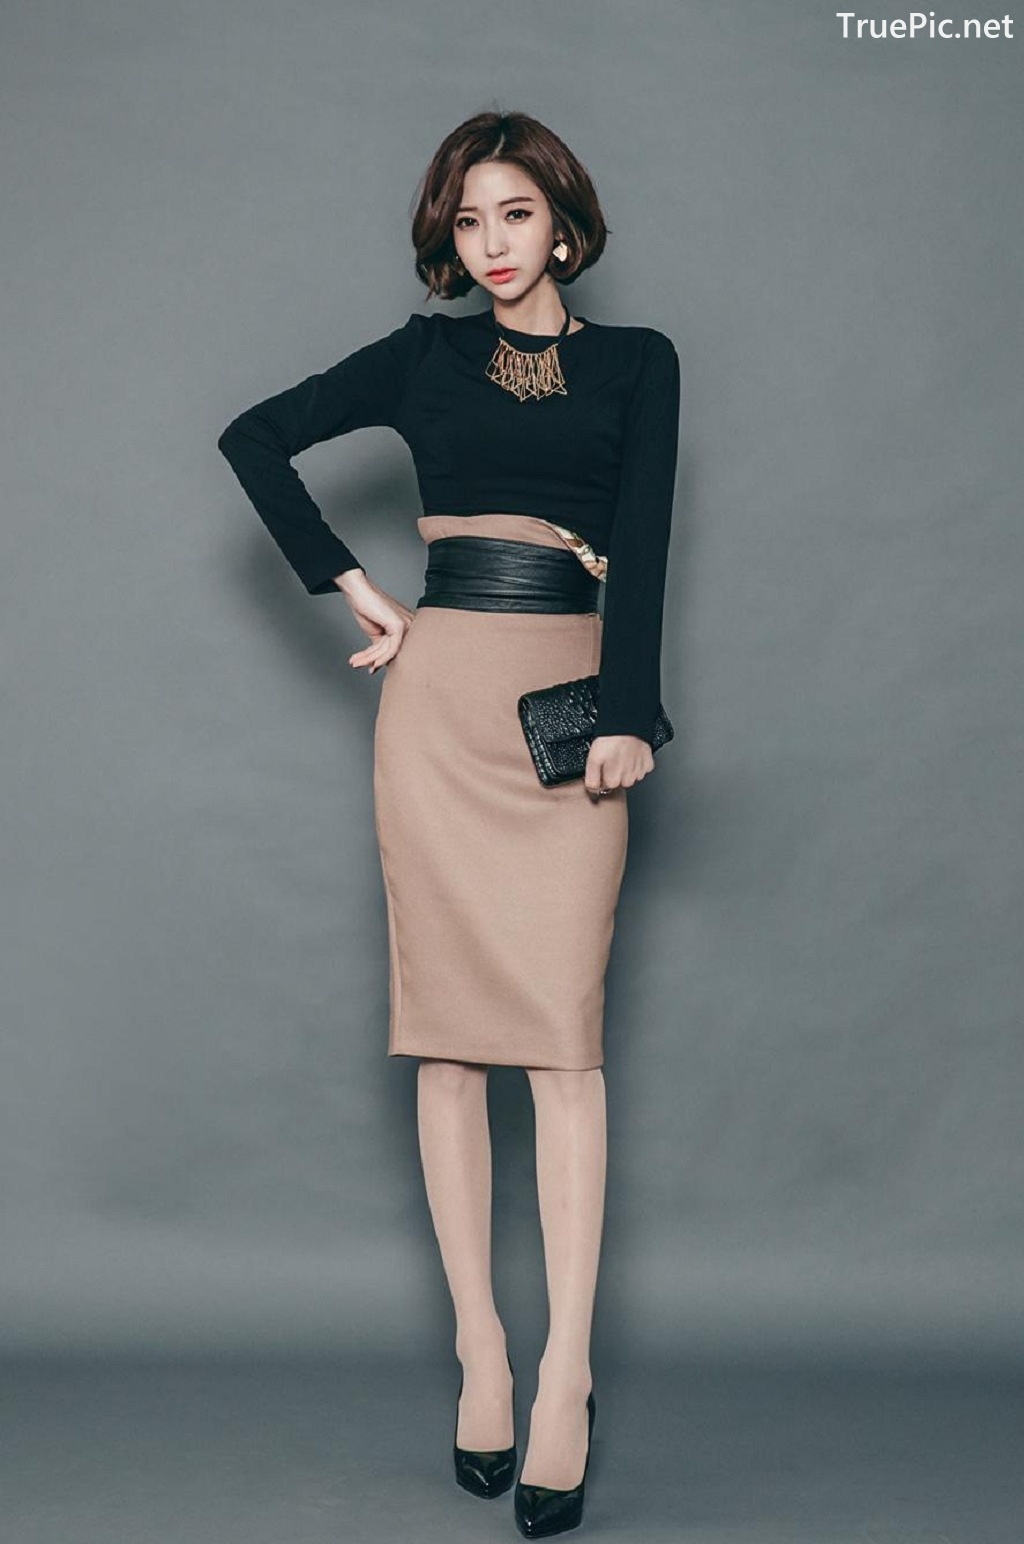 Image Ye Jin - Korean Fashion Model - Studio Photoshoot Collection - TruePic.net - Picture-11